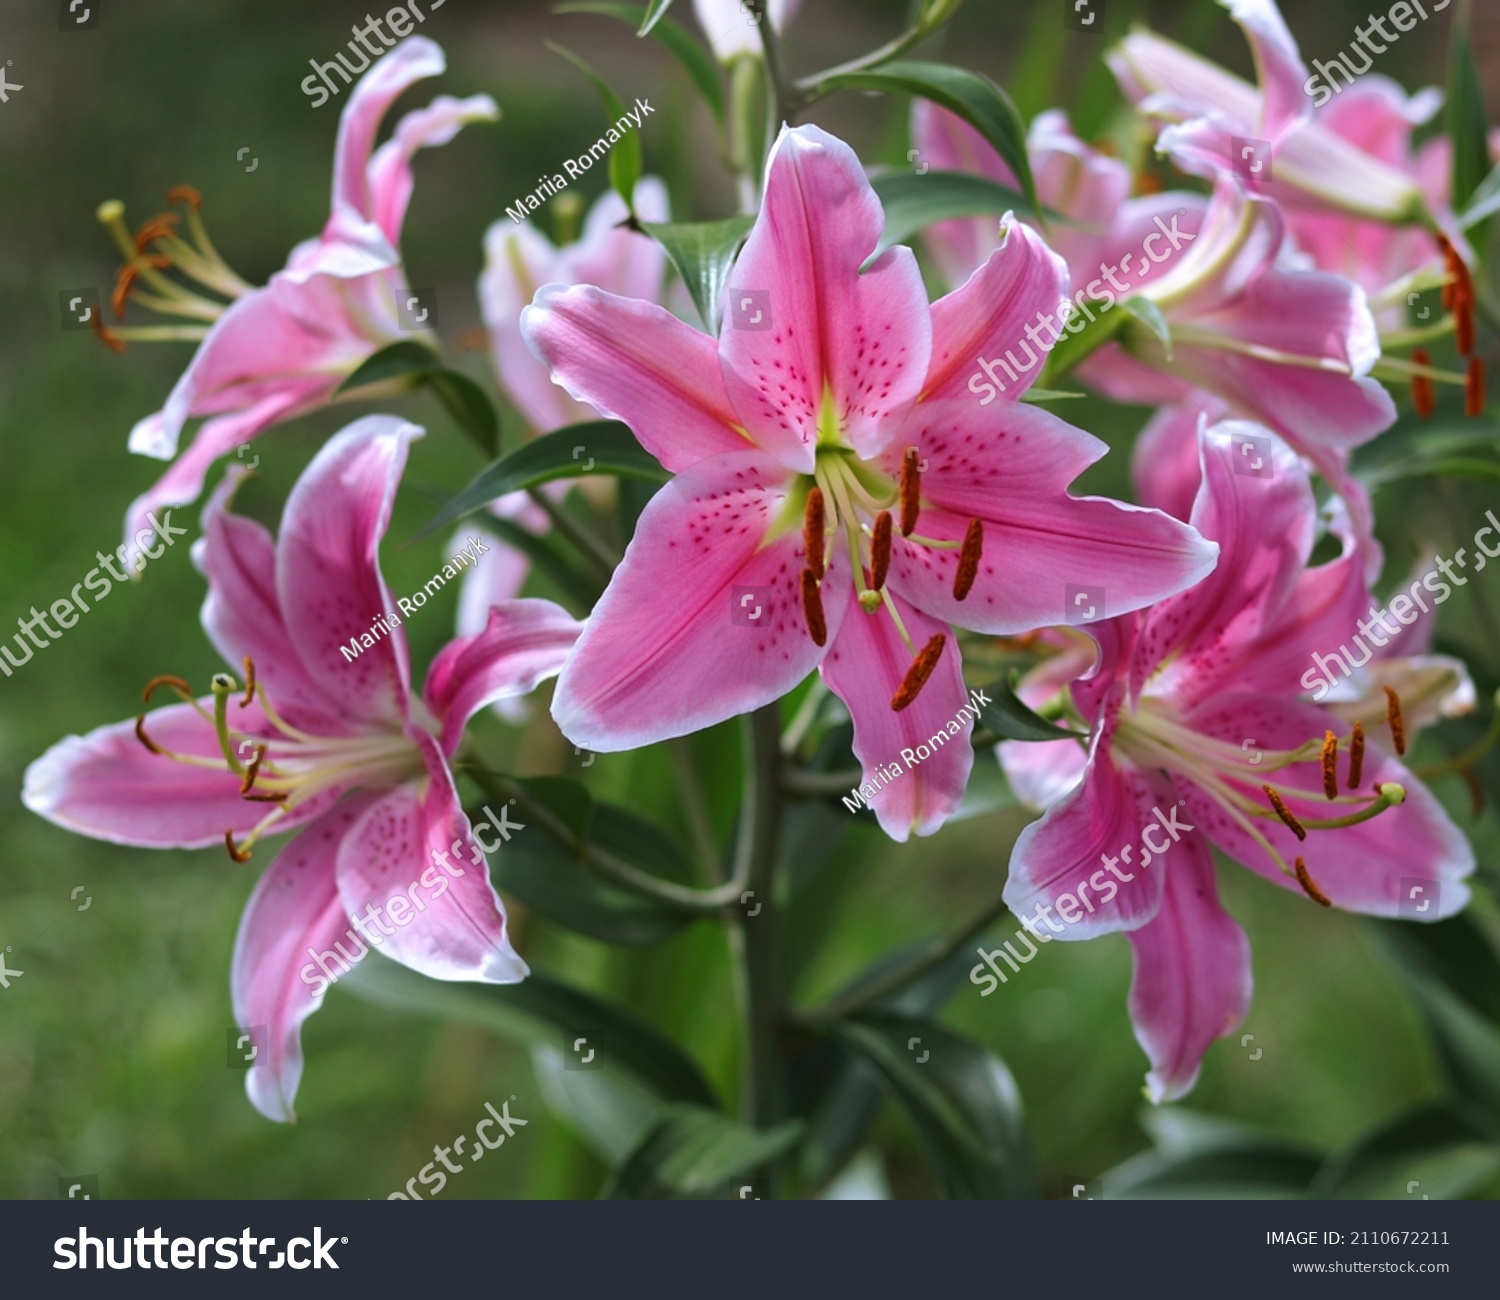 53,219 Flower lilium Images, Stock Photos & Vectors | Shutterstock